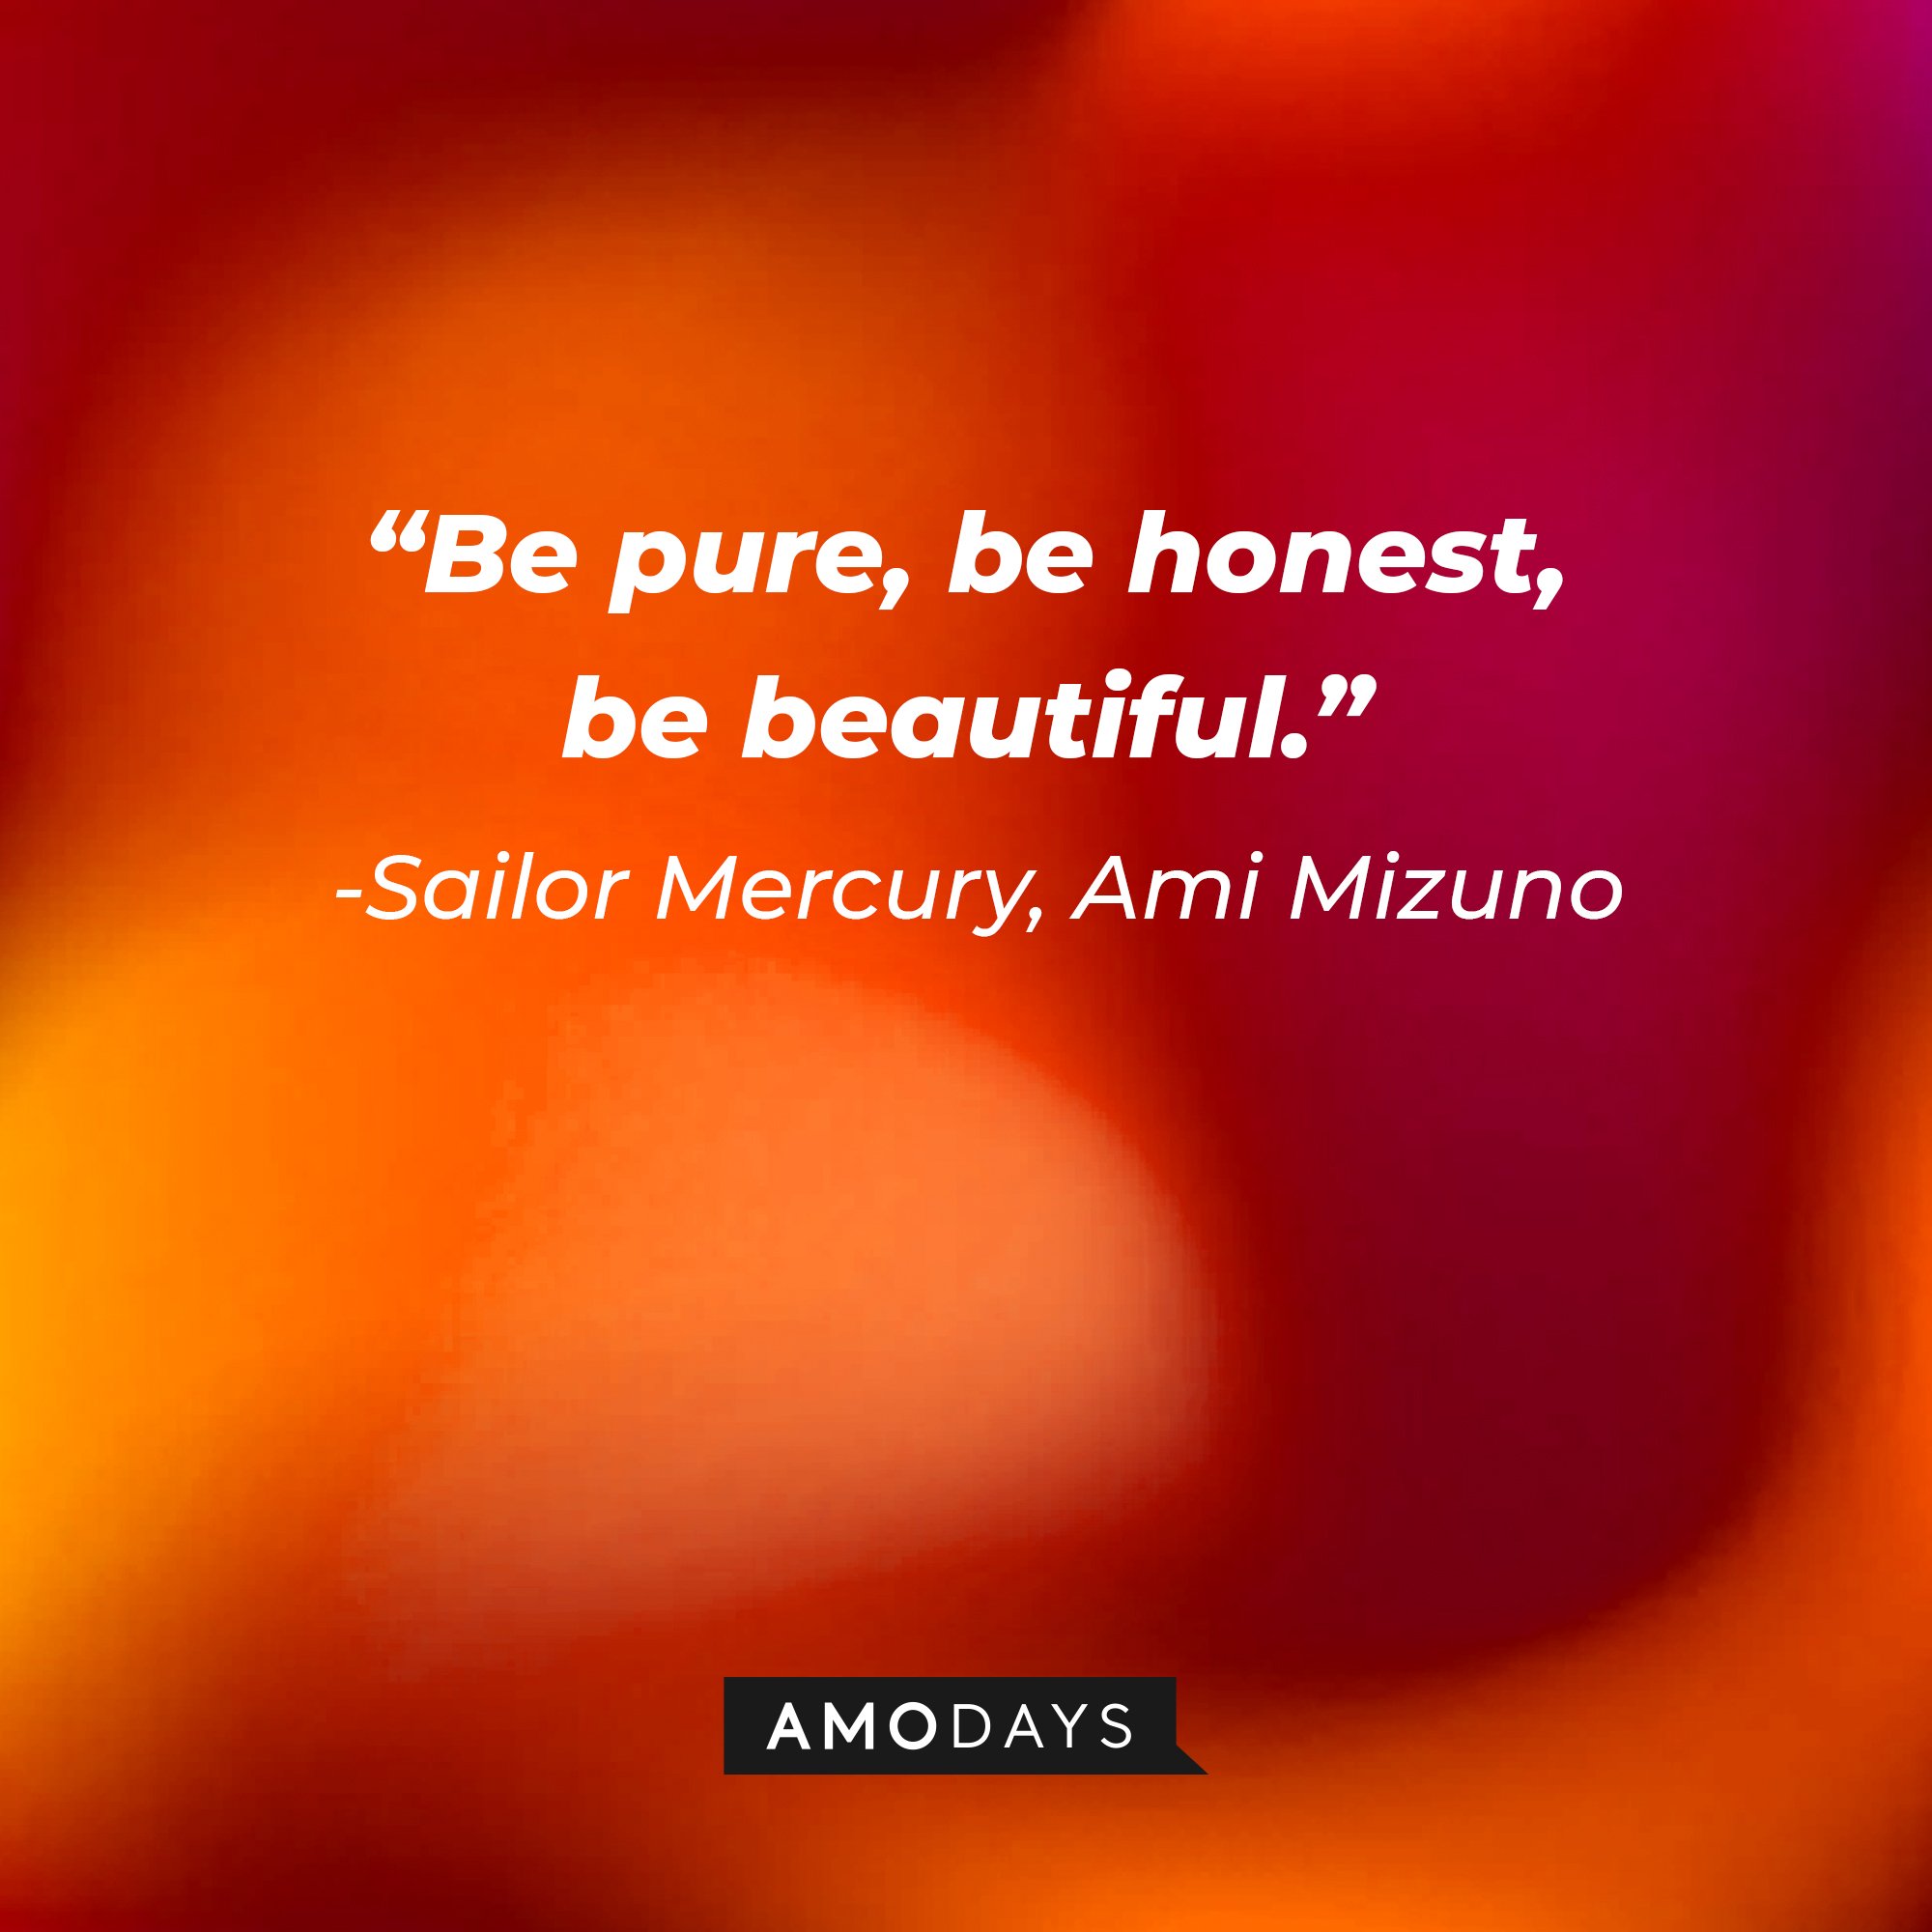  Sailor Mercury/Ami Mizuno’s quote: "Be pure, be honest, be beautiful." | Image: AmoDays